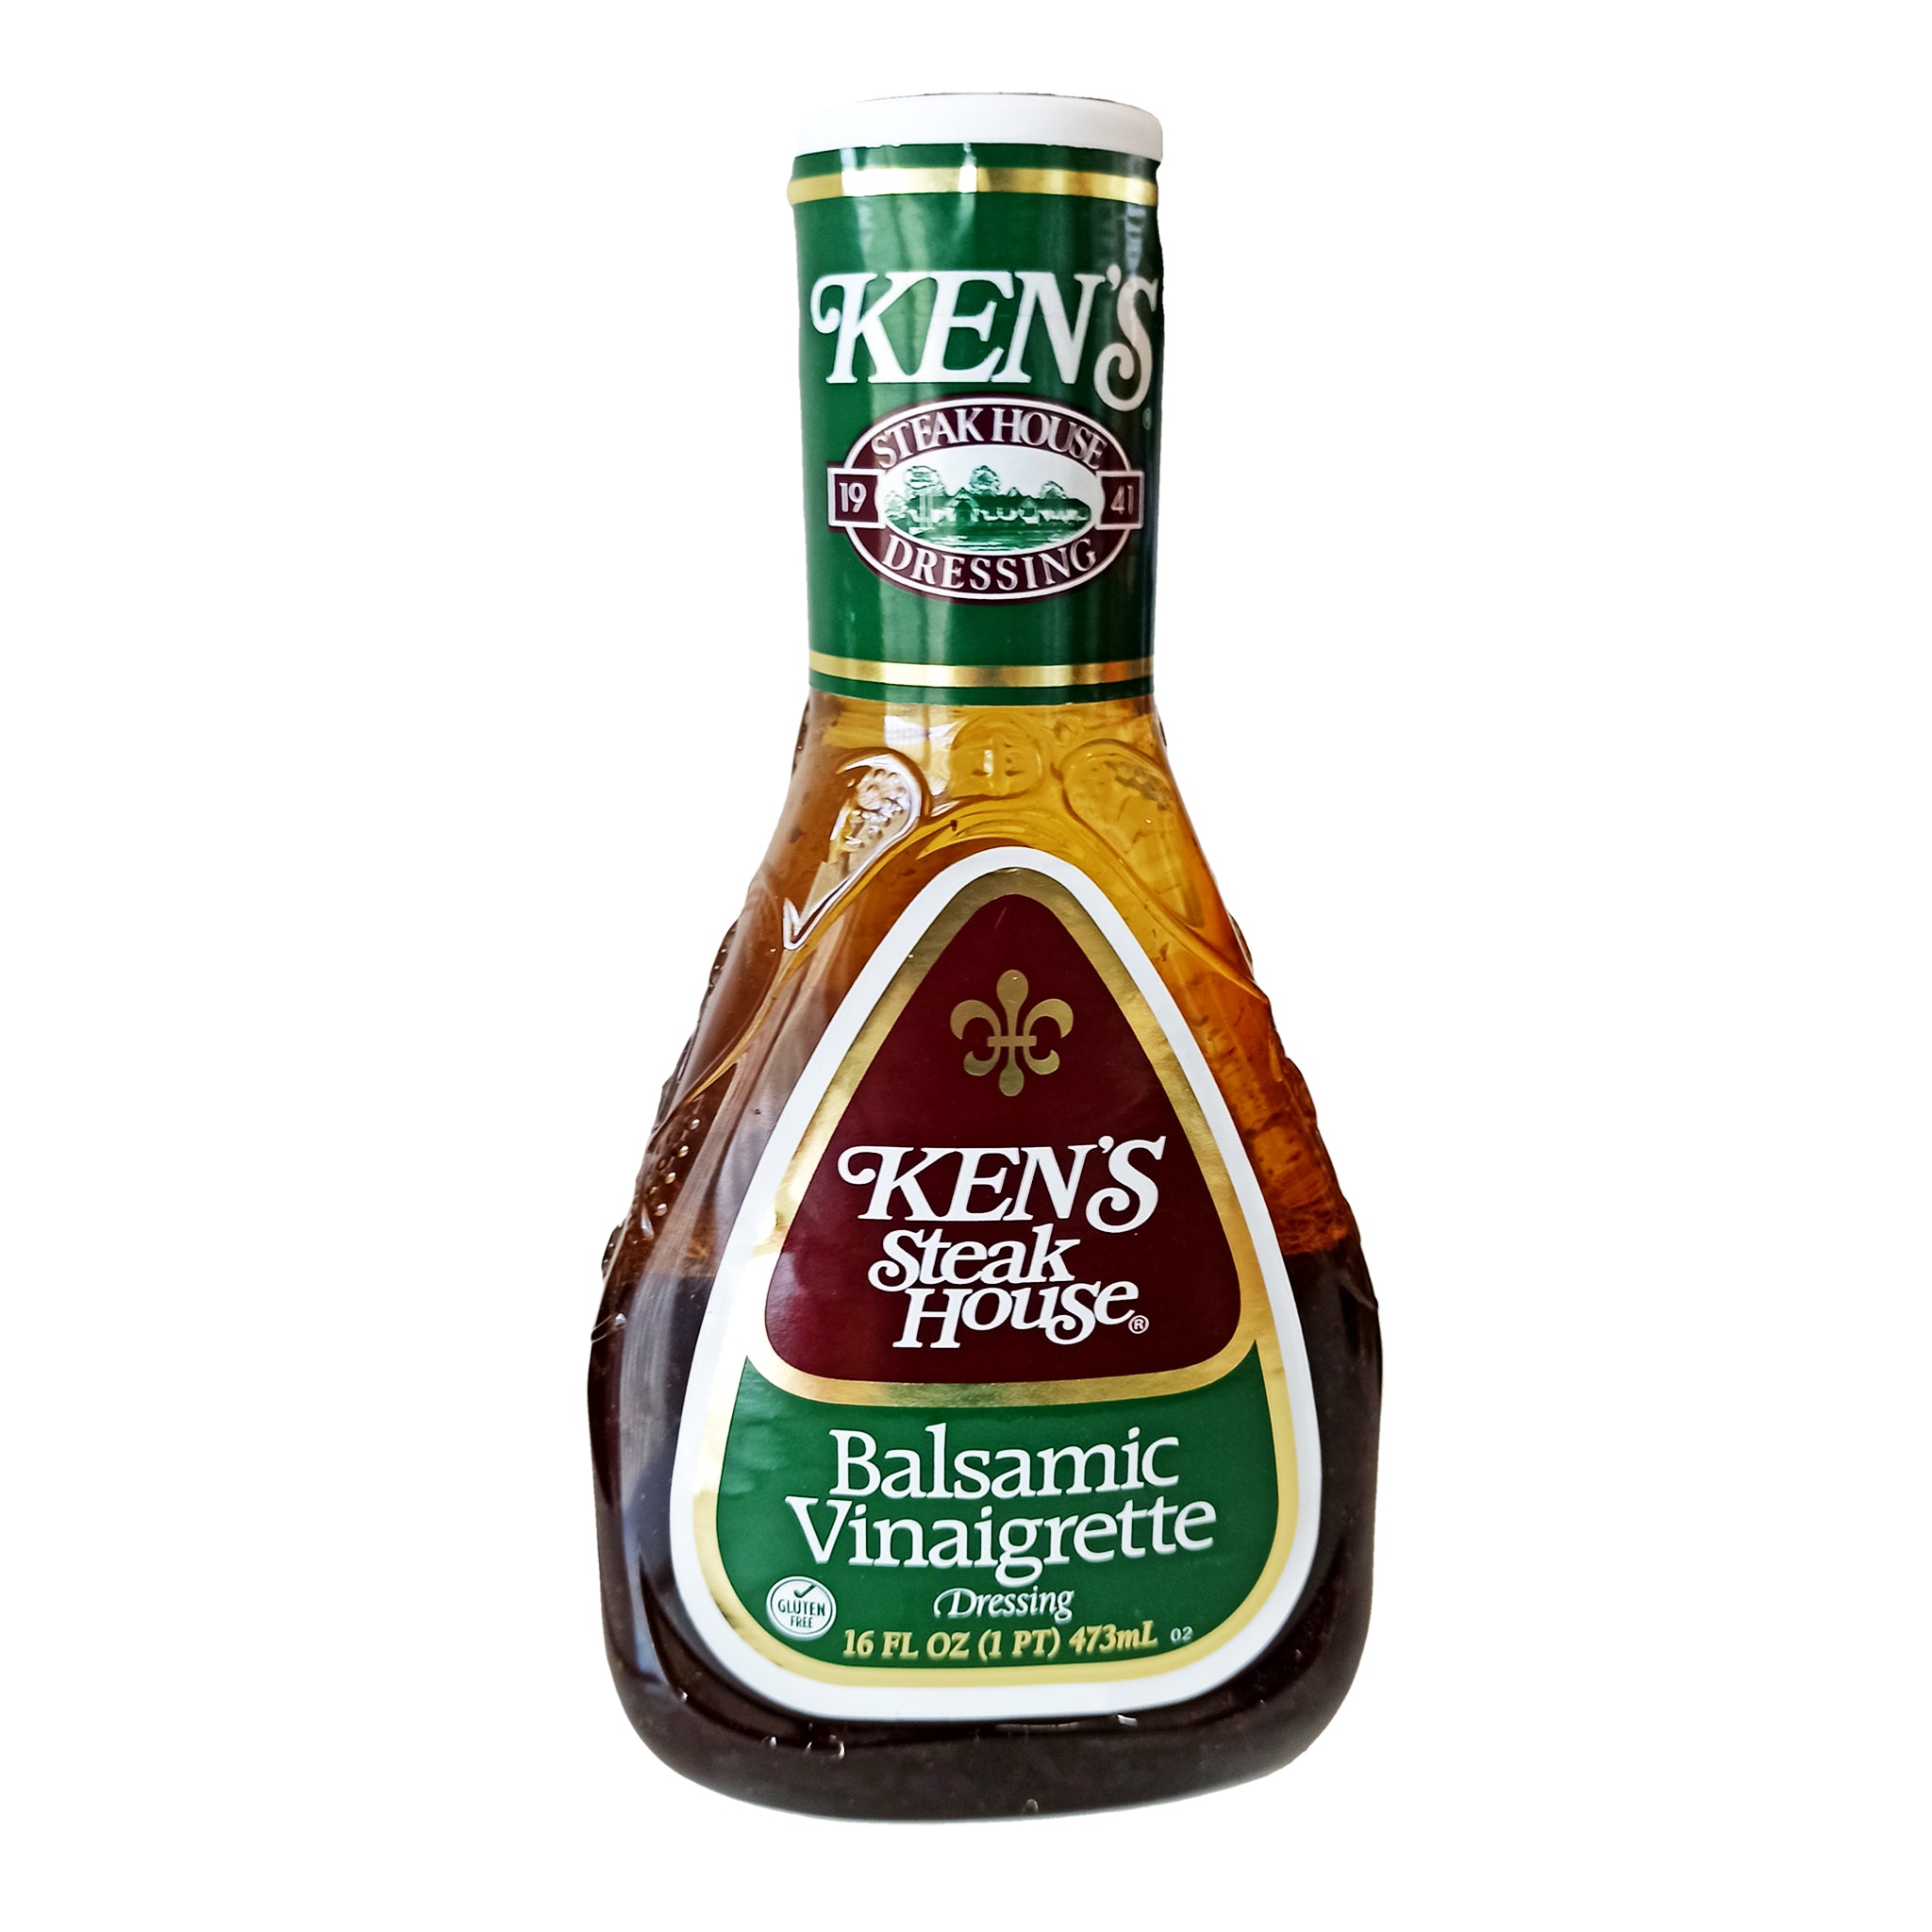 Ken's Balsamic Vinaigrette - רוטב חומץ בלסמי - טעימים